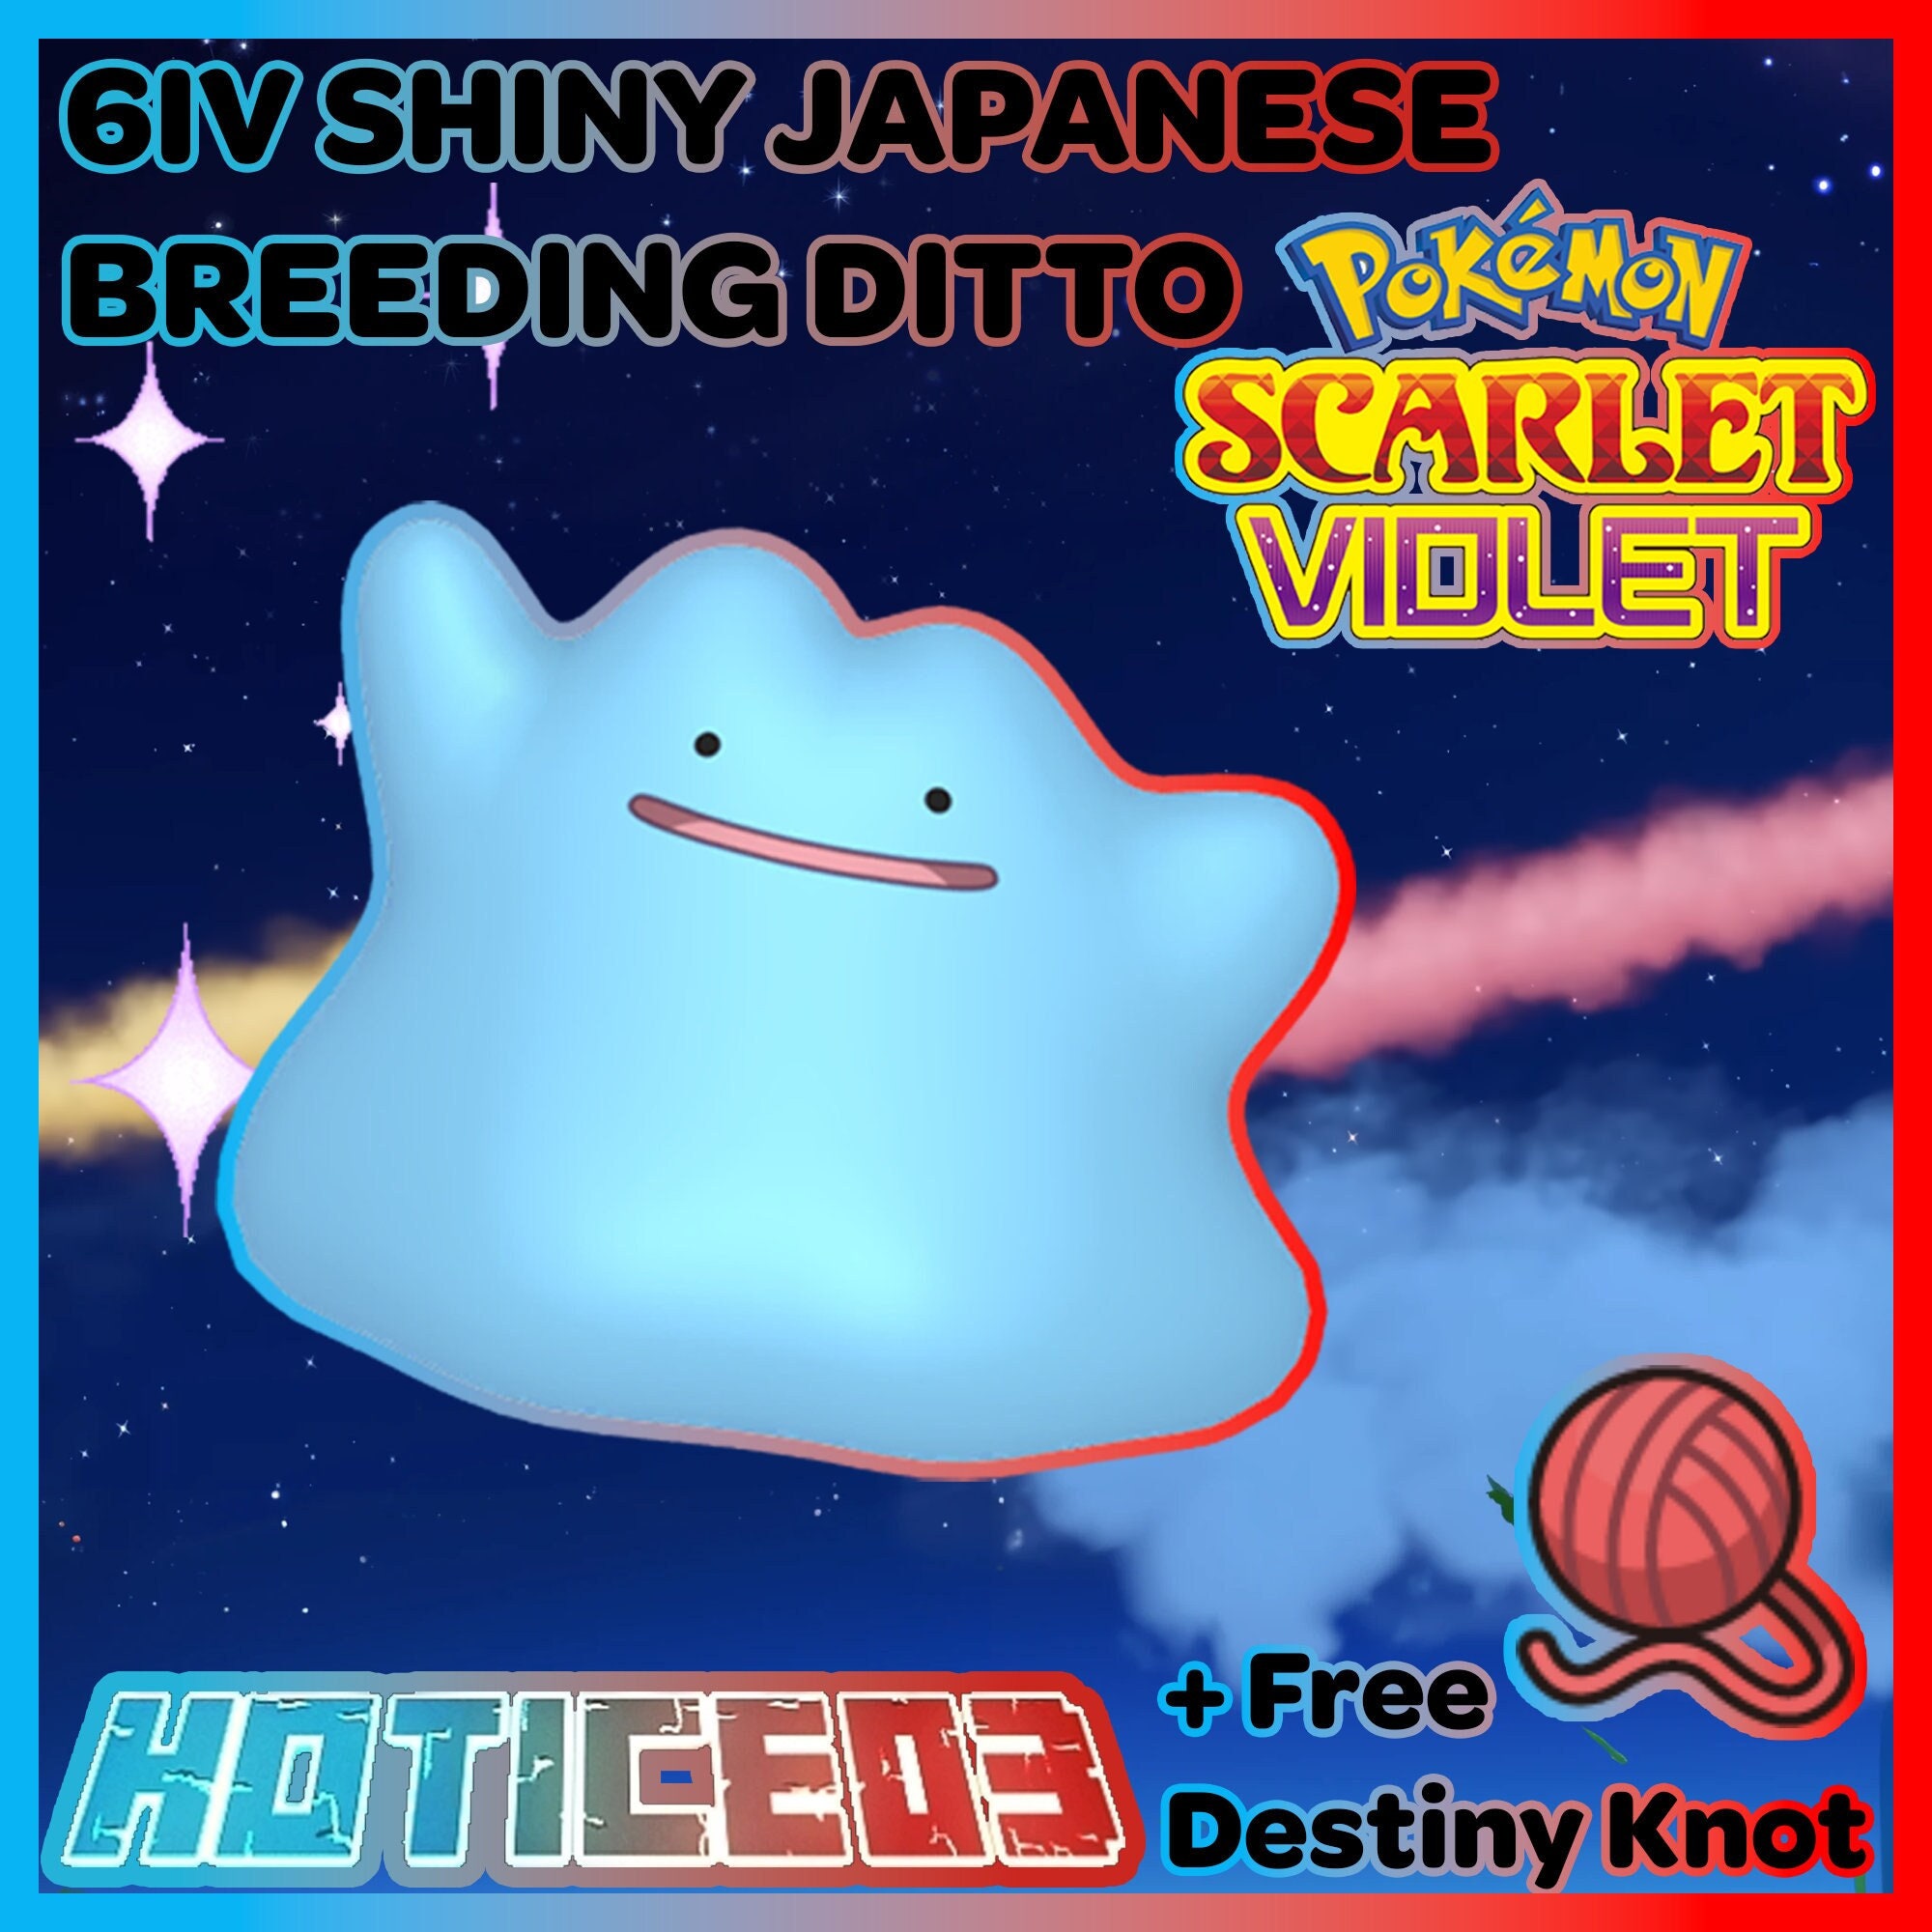 Ditto for Competitive Pokémon Breeding • 6IVs, Shiny, Level 100